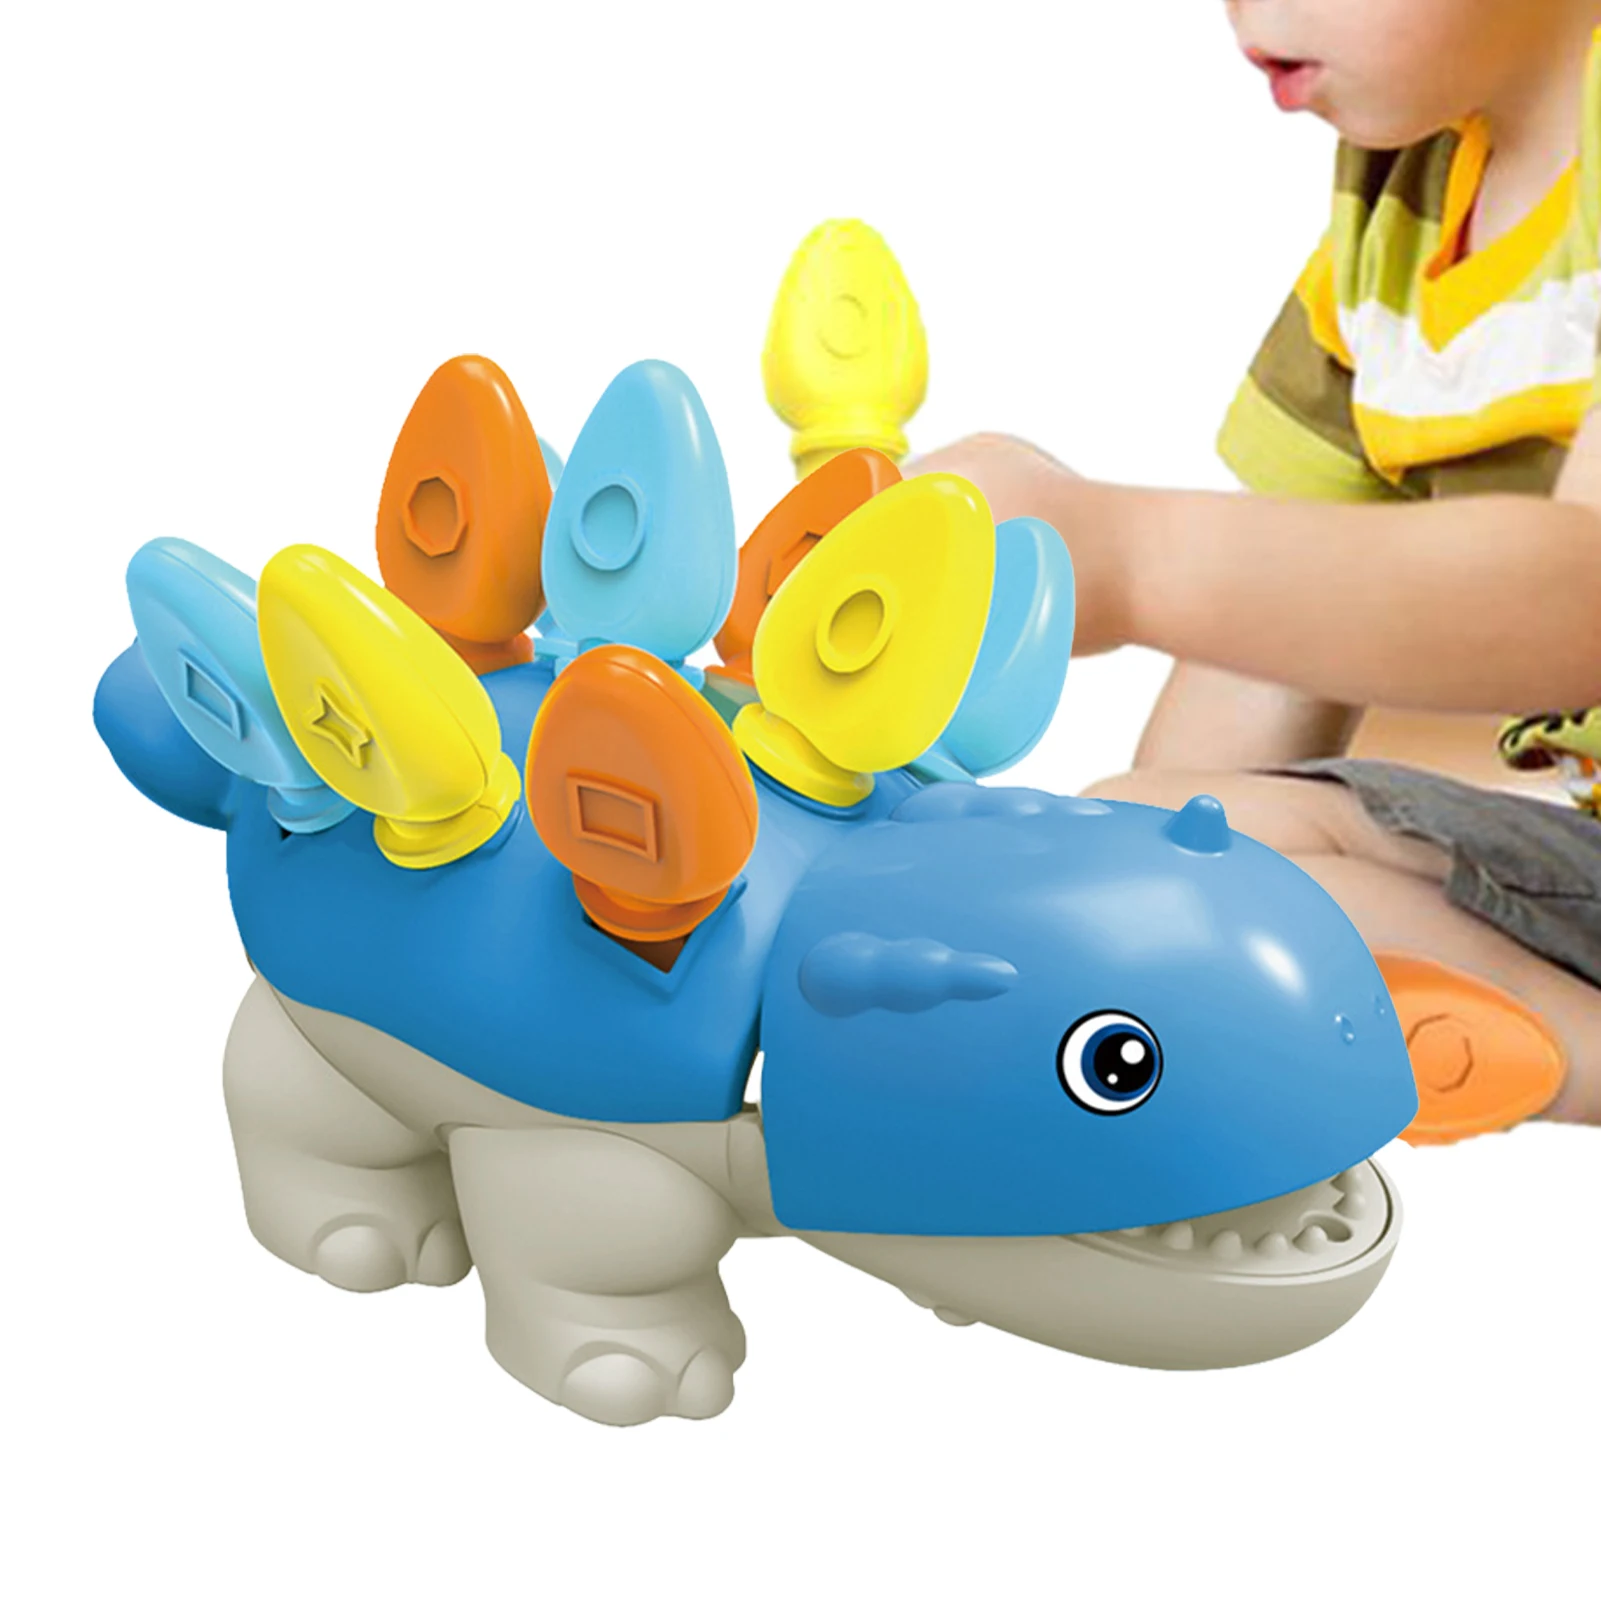 

Toddler Montessori Toys Baby Toy Fine Motor Skills And Dinosaur Sensory Toys Developmental Learning Sorting Sensory Toys For